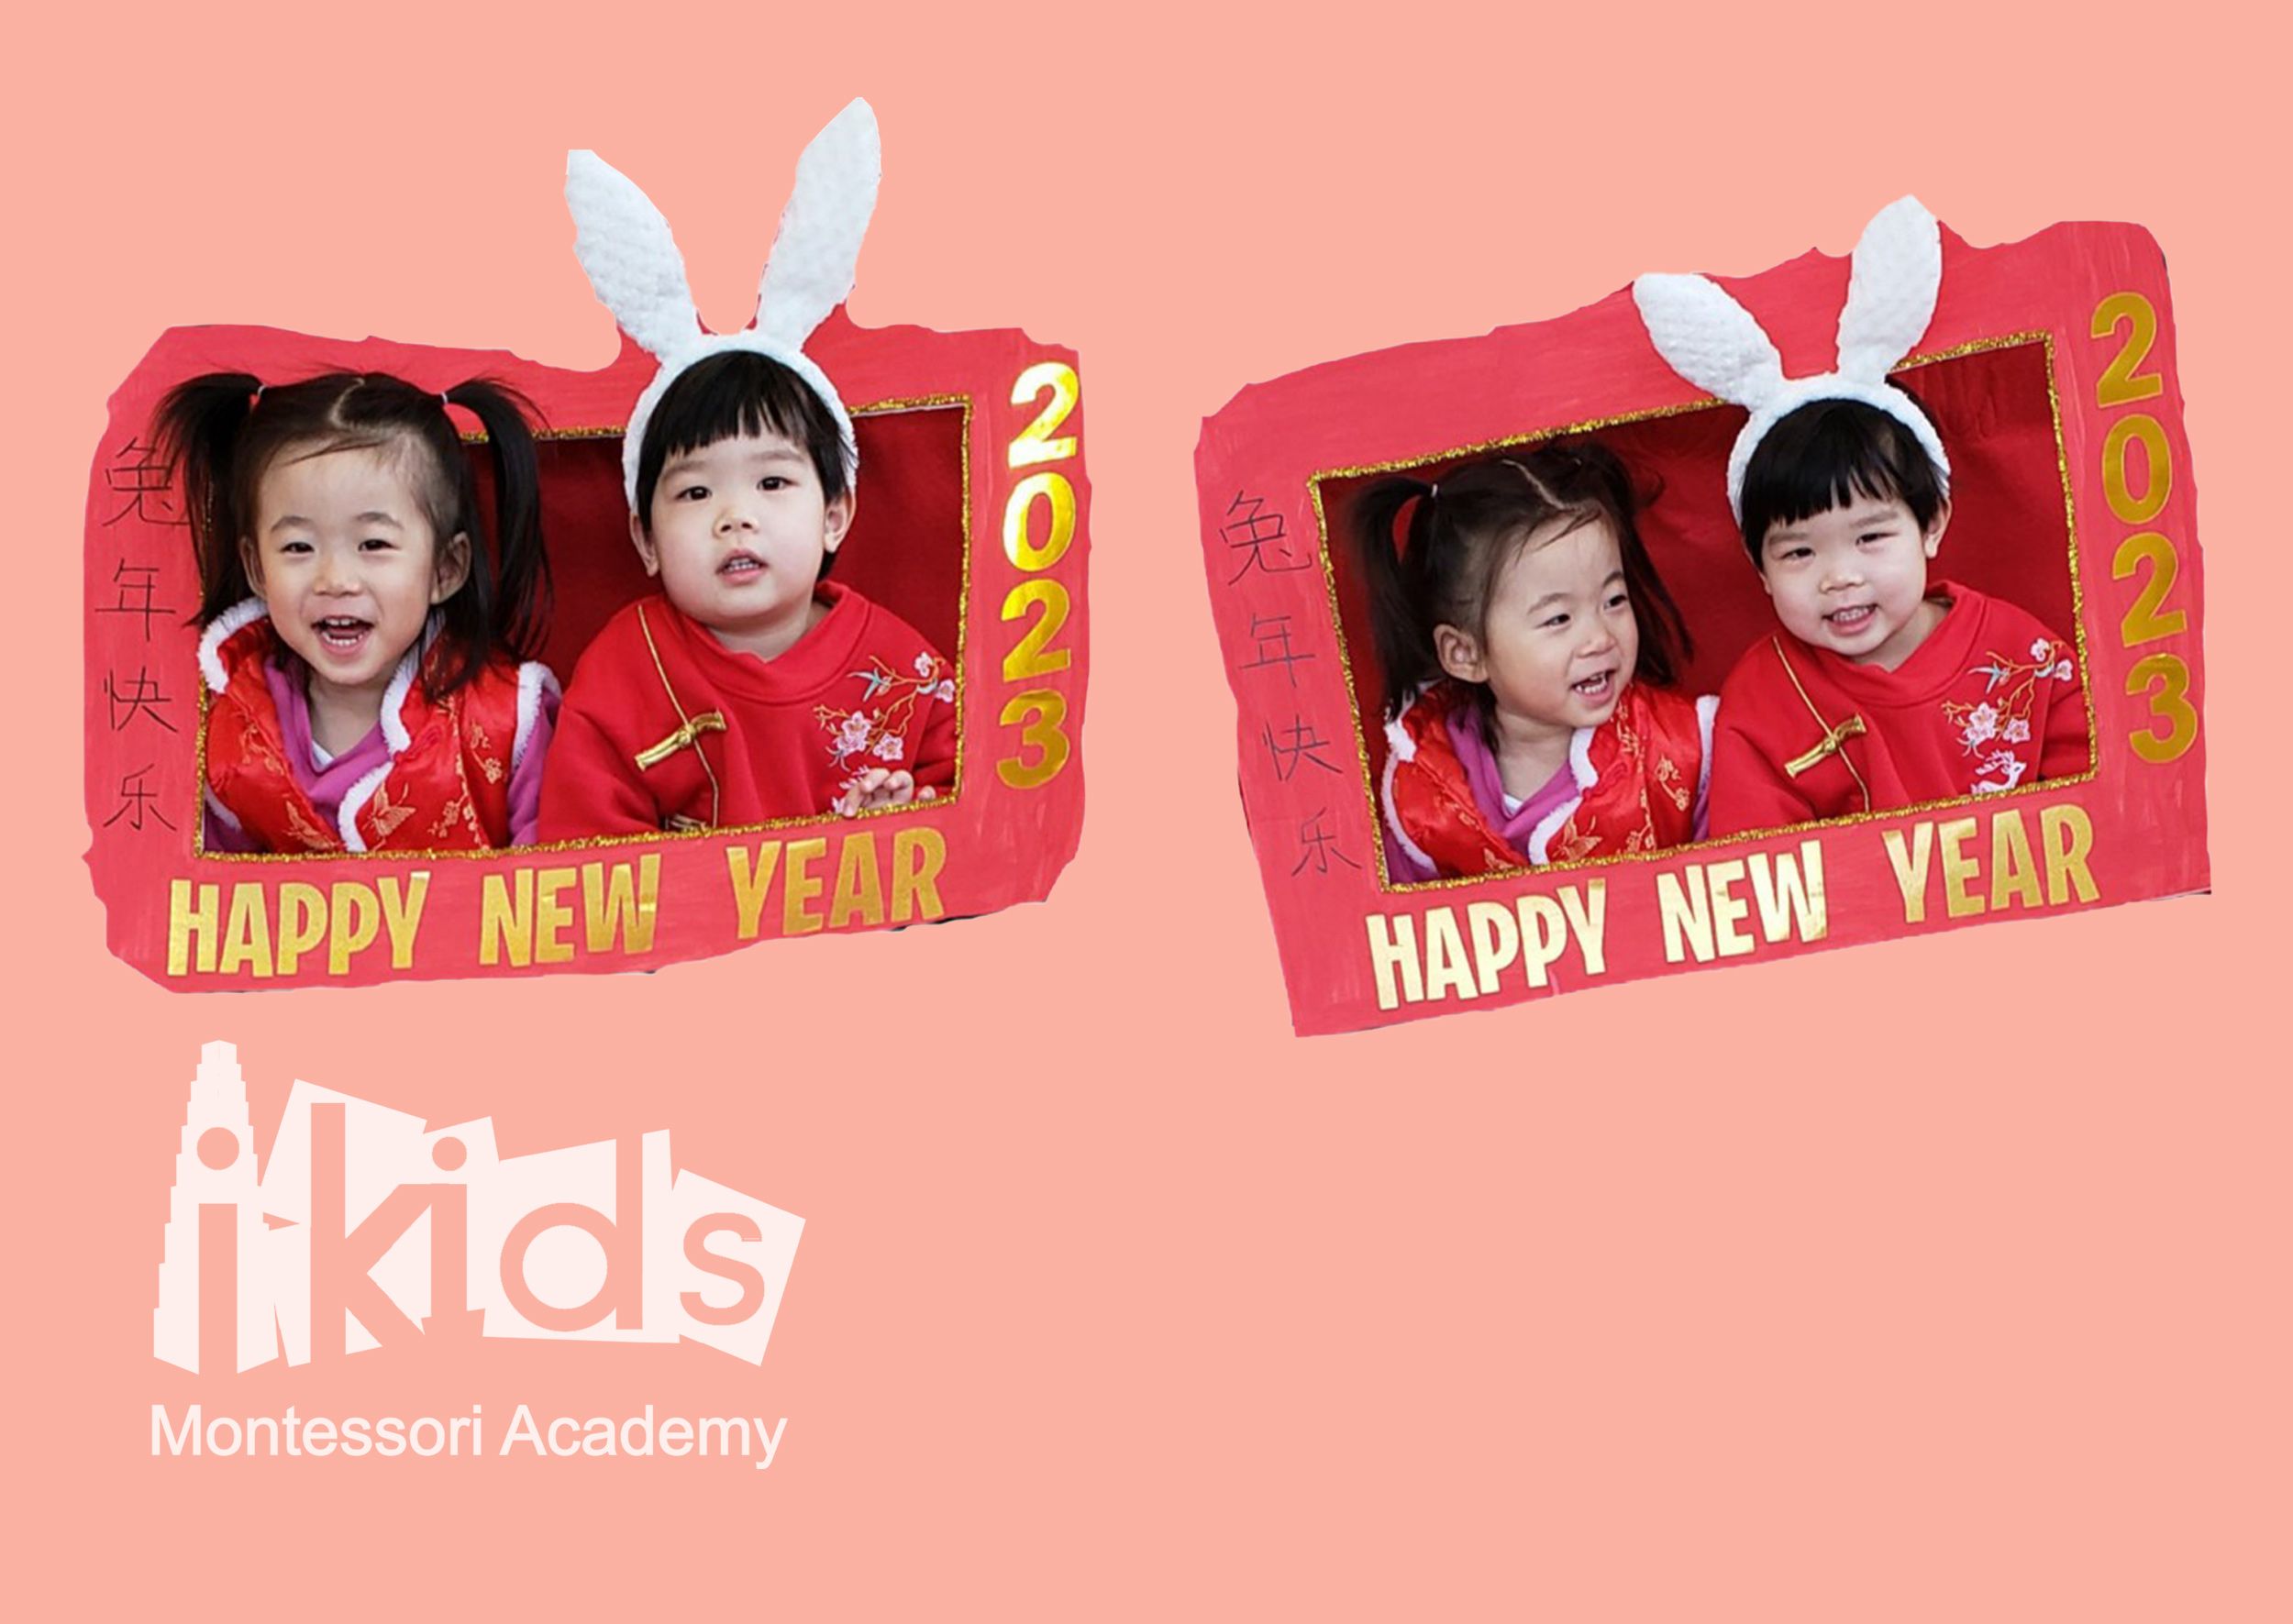 Richmond Hill and Markham montessori academy blogs | Celebrating Lunar New Year at iKids Montessori Academy